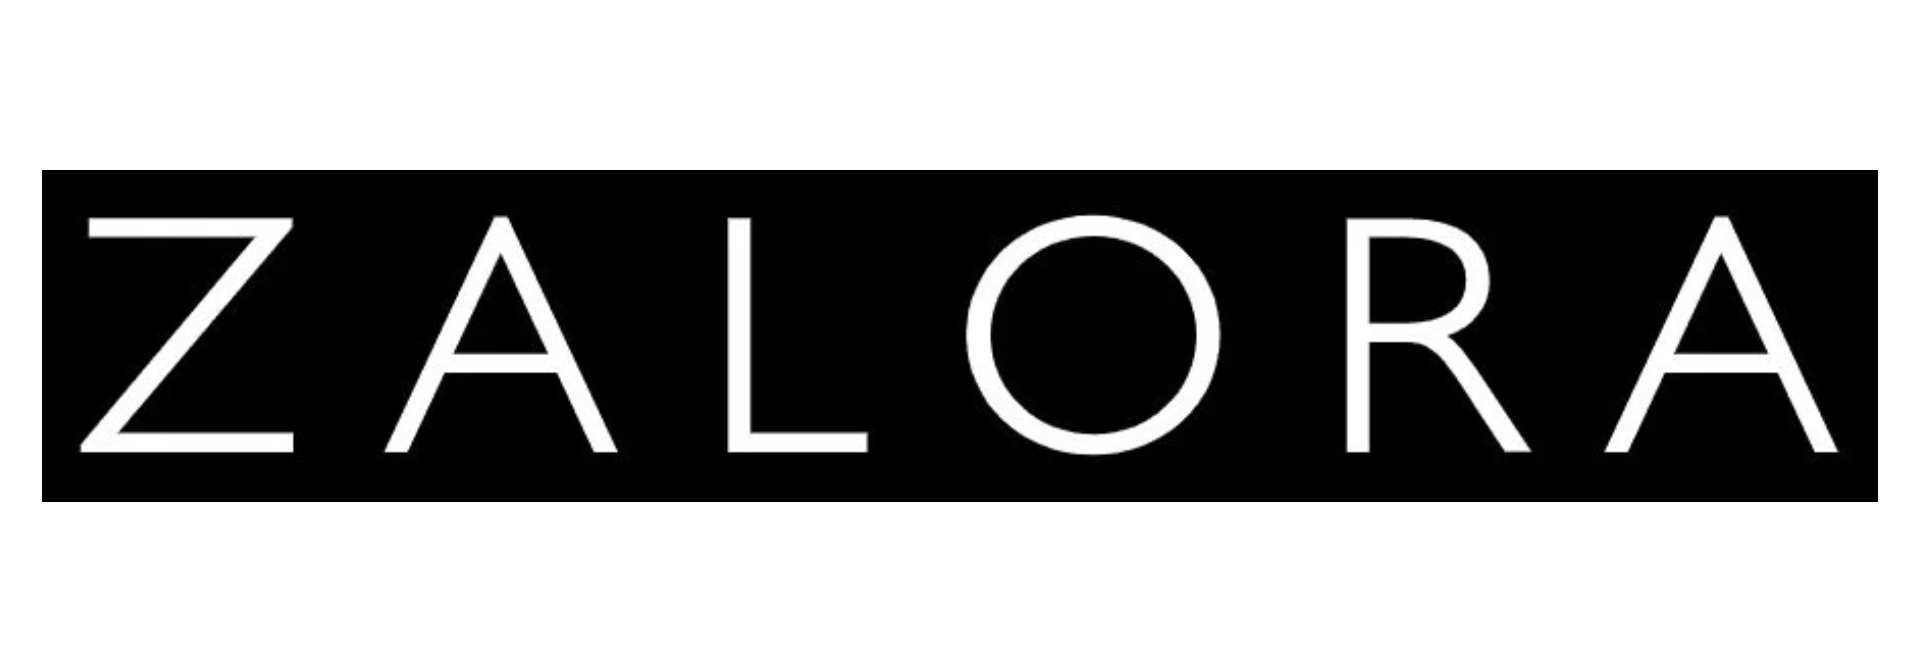 zalora-logo-black